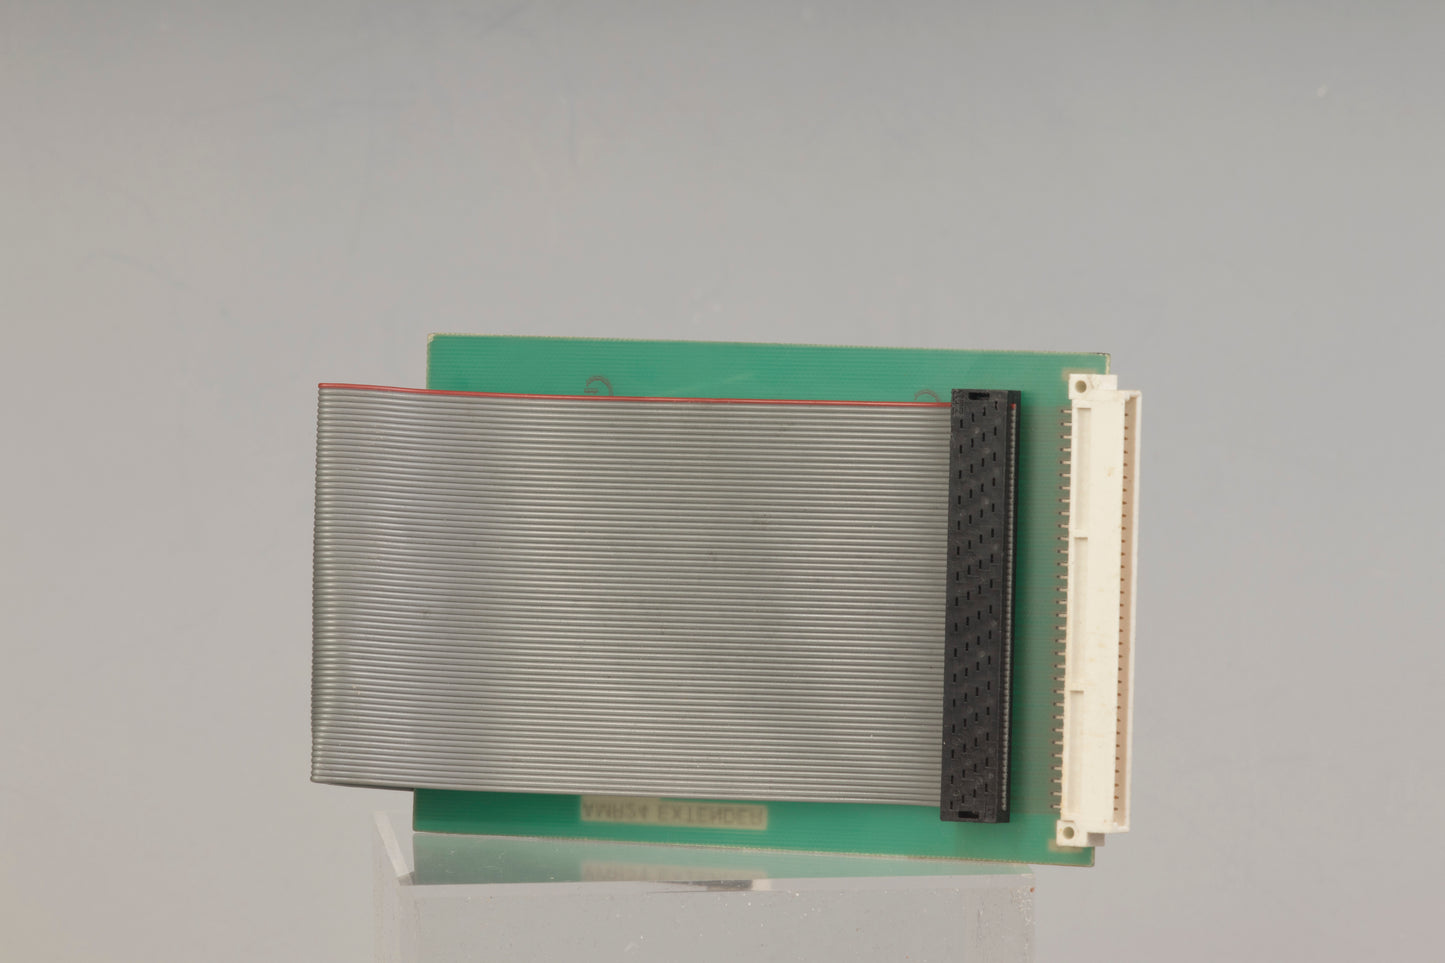 DDA AMR-24 ribbon extender card; for analog console maintenance